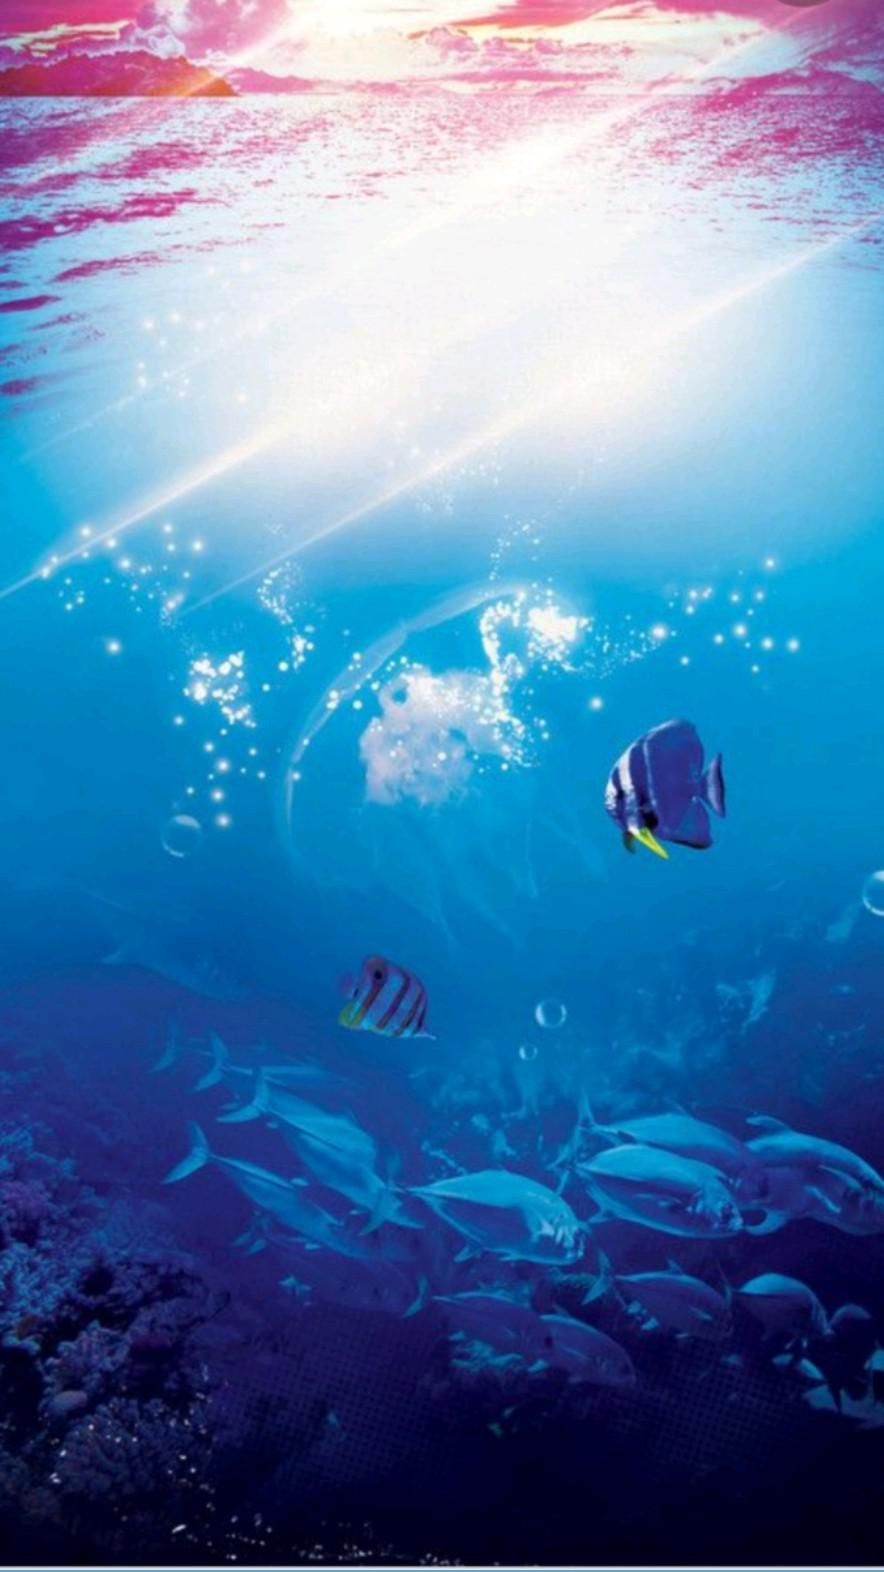 Underwater scenery with fish and sun rays. - Underwater